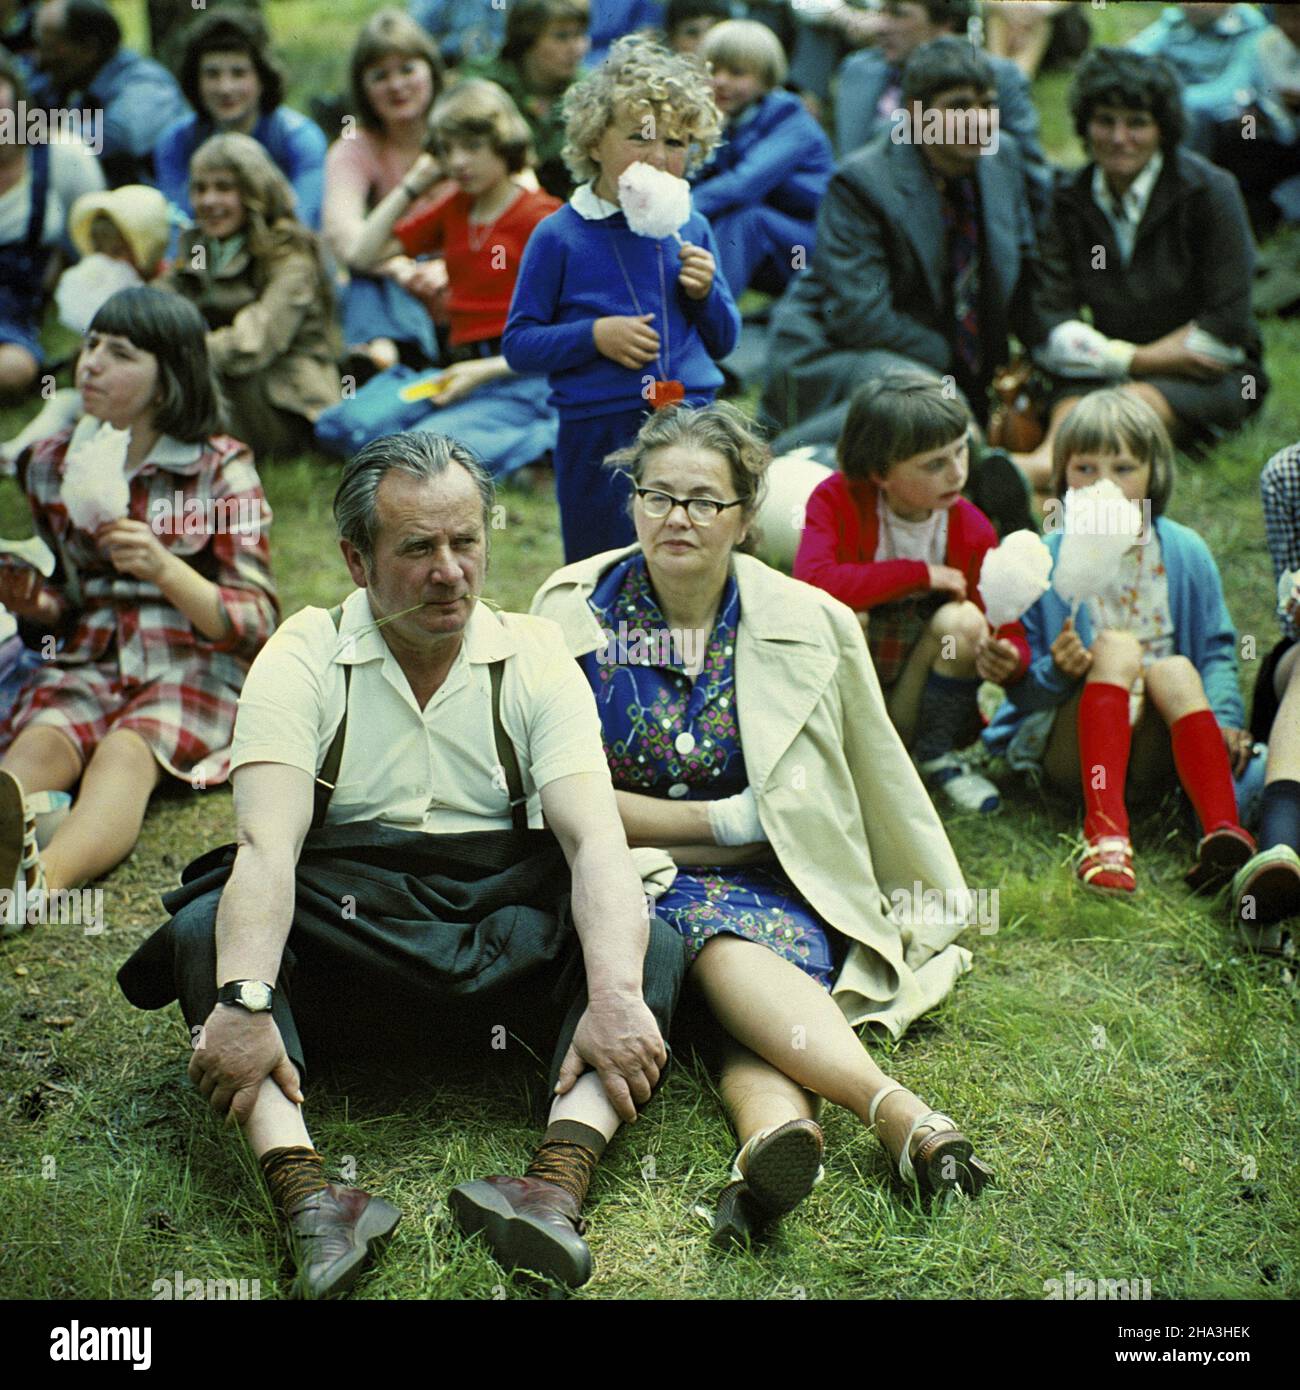 Warszawa 1978. meg PAP/Jan Morek Dok³adny miesi¹c i dzieñ wydarzenia nieustalone. Varsavia, Polonia, 1978. La gente partecipa a una celebrazione del picnic Folk a Varsavia. PAP/JAN MOREK Foto Stock